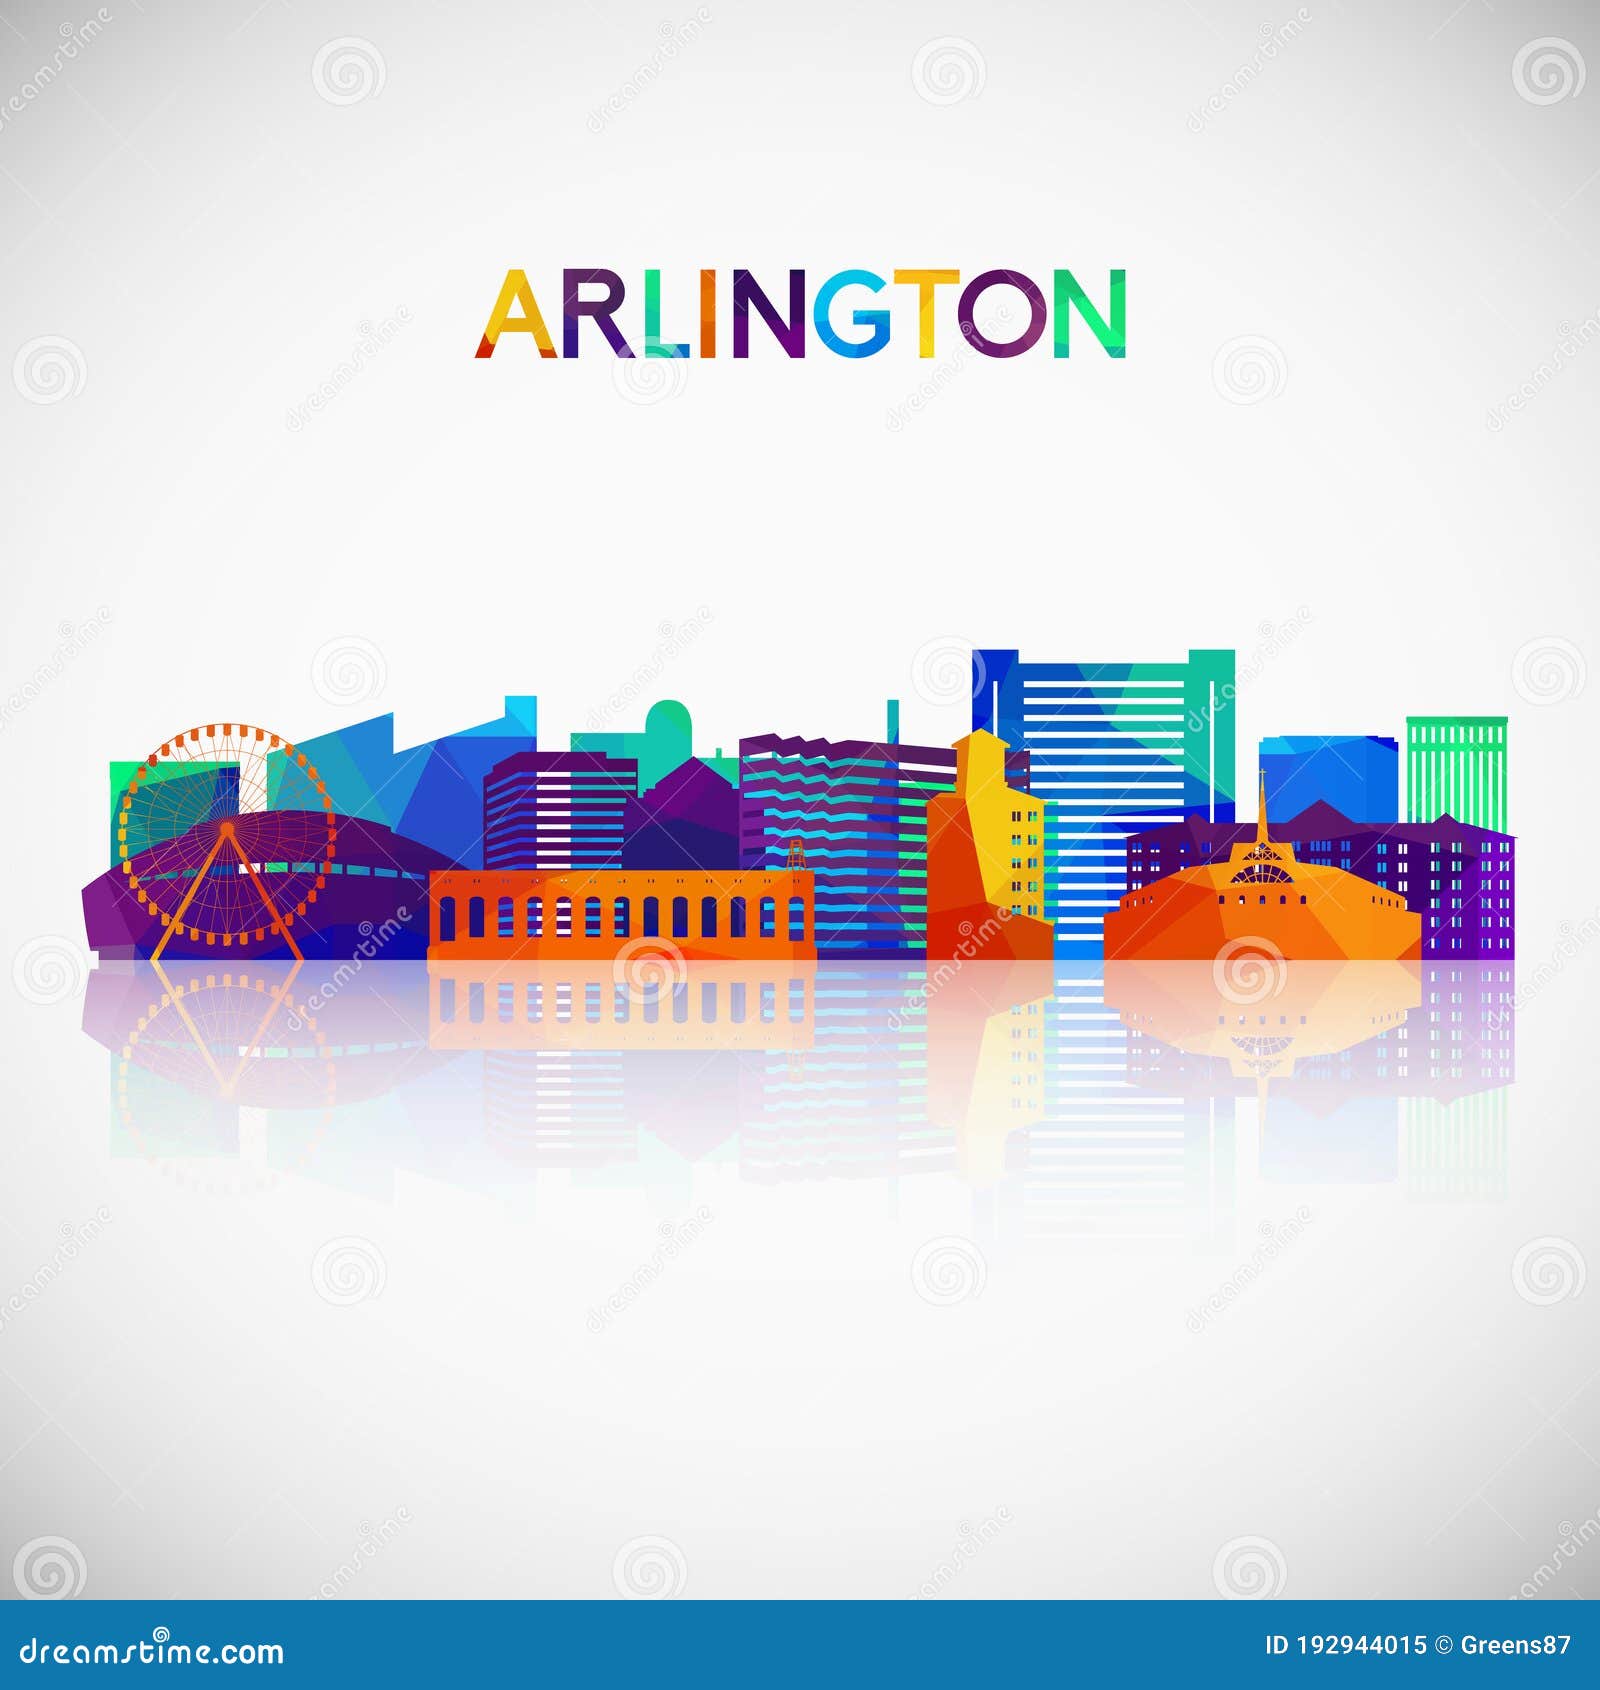 arlington, texas skyline silhouette in colorful geometric style.